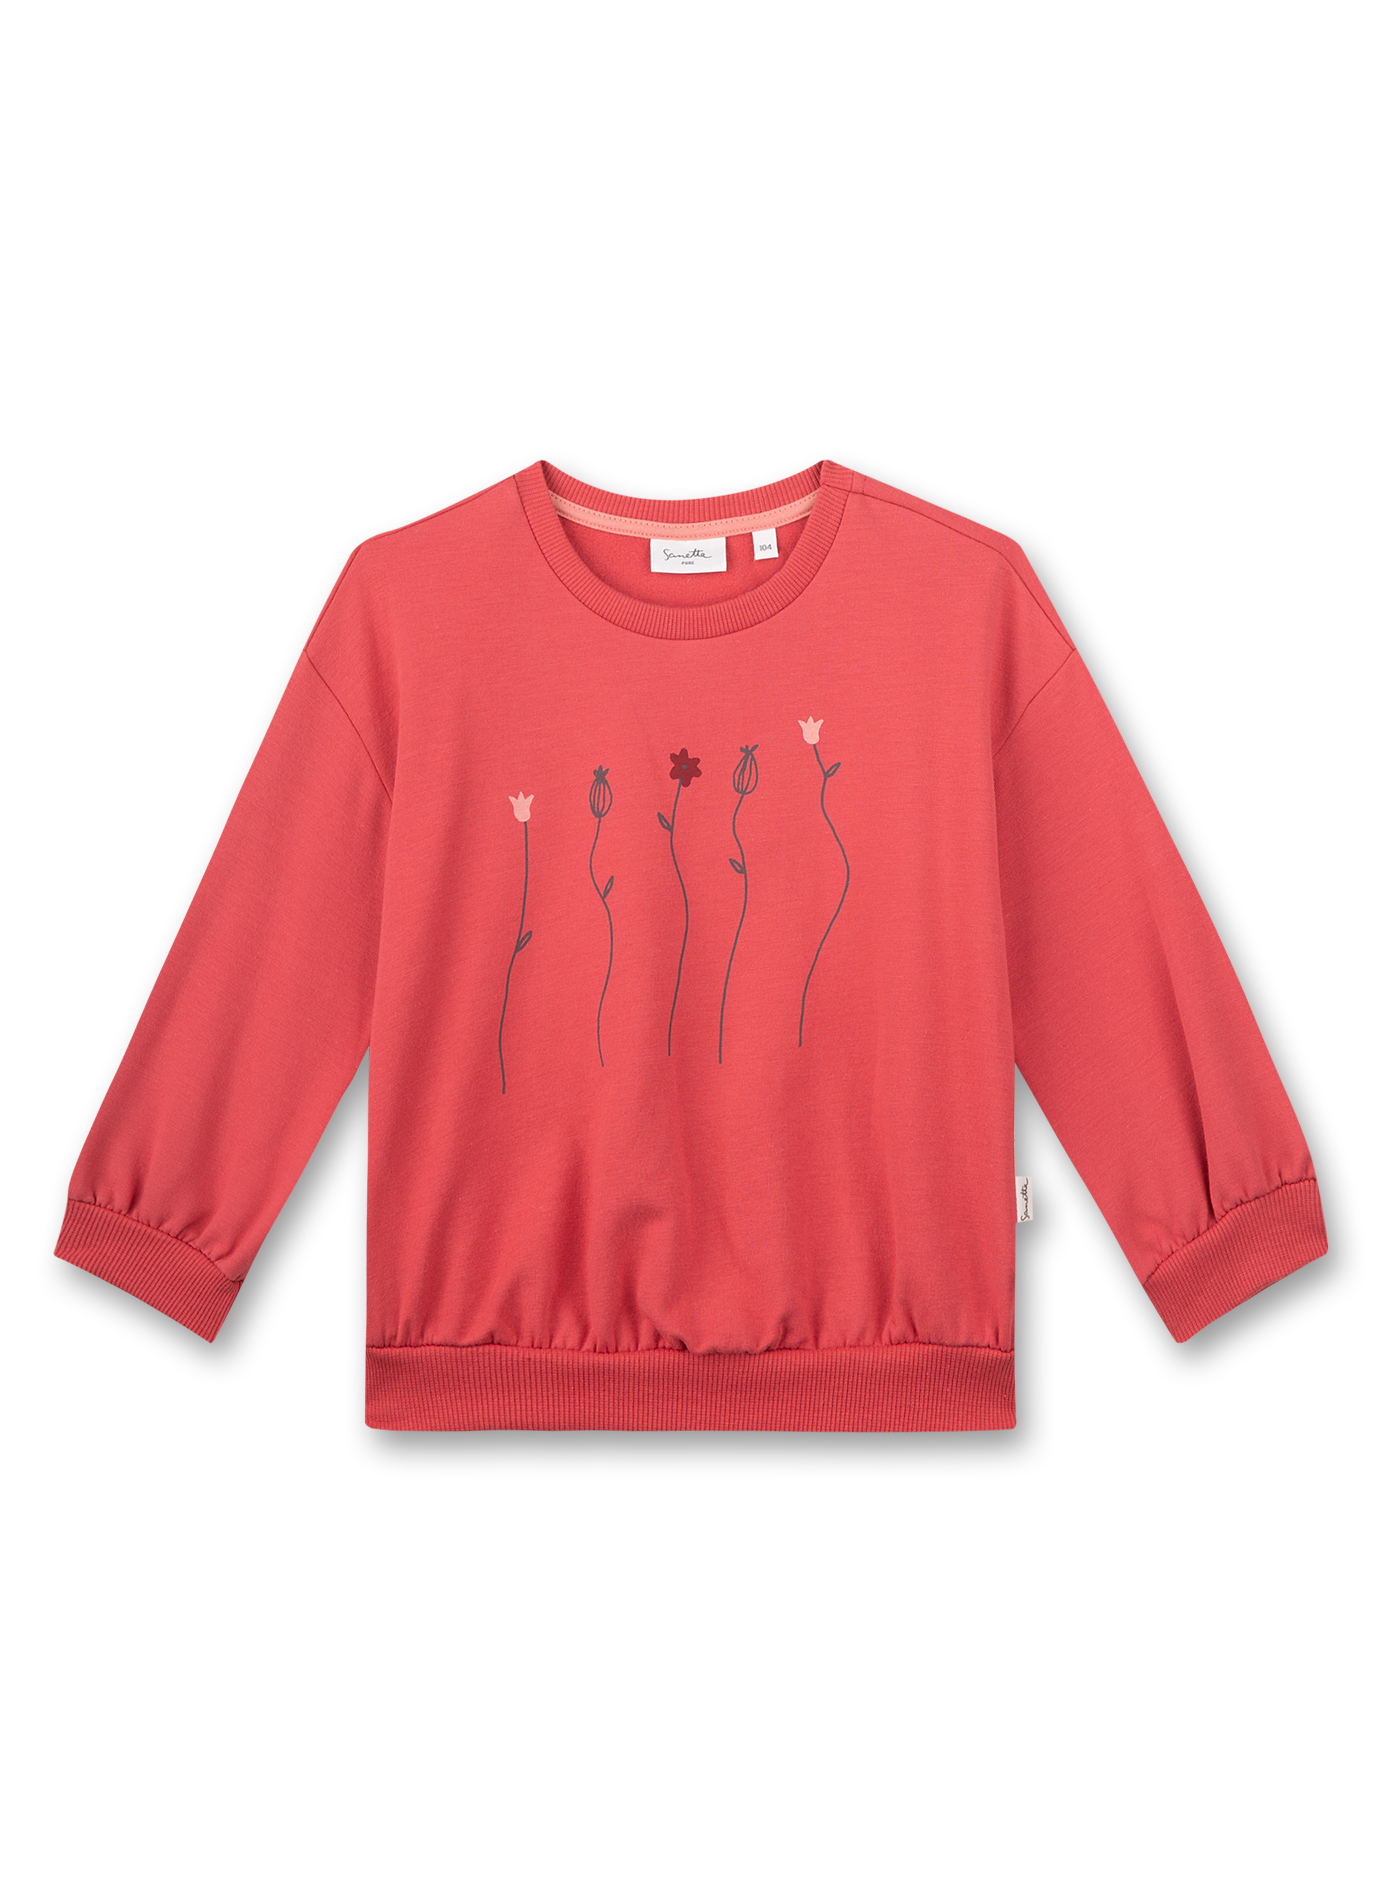 Mädchen-Sweatshirt Rot